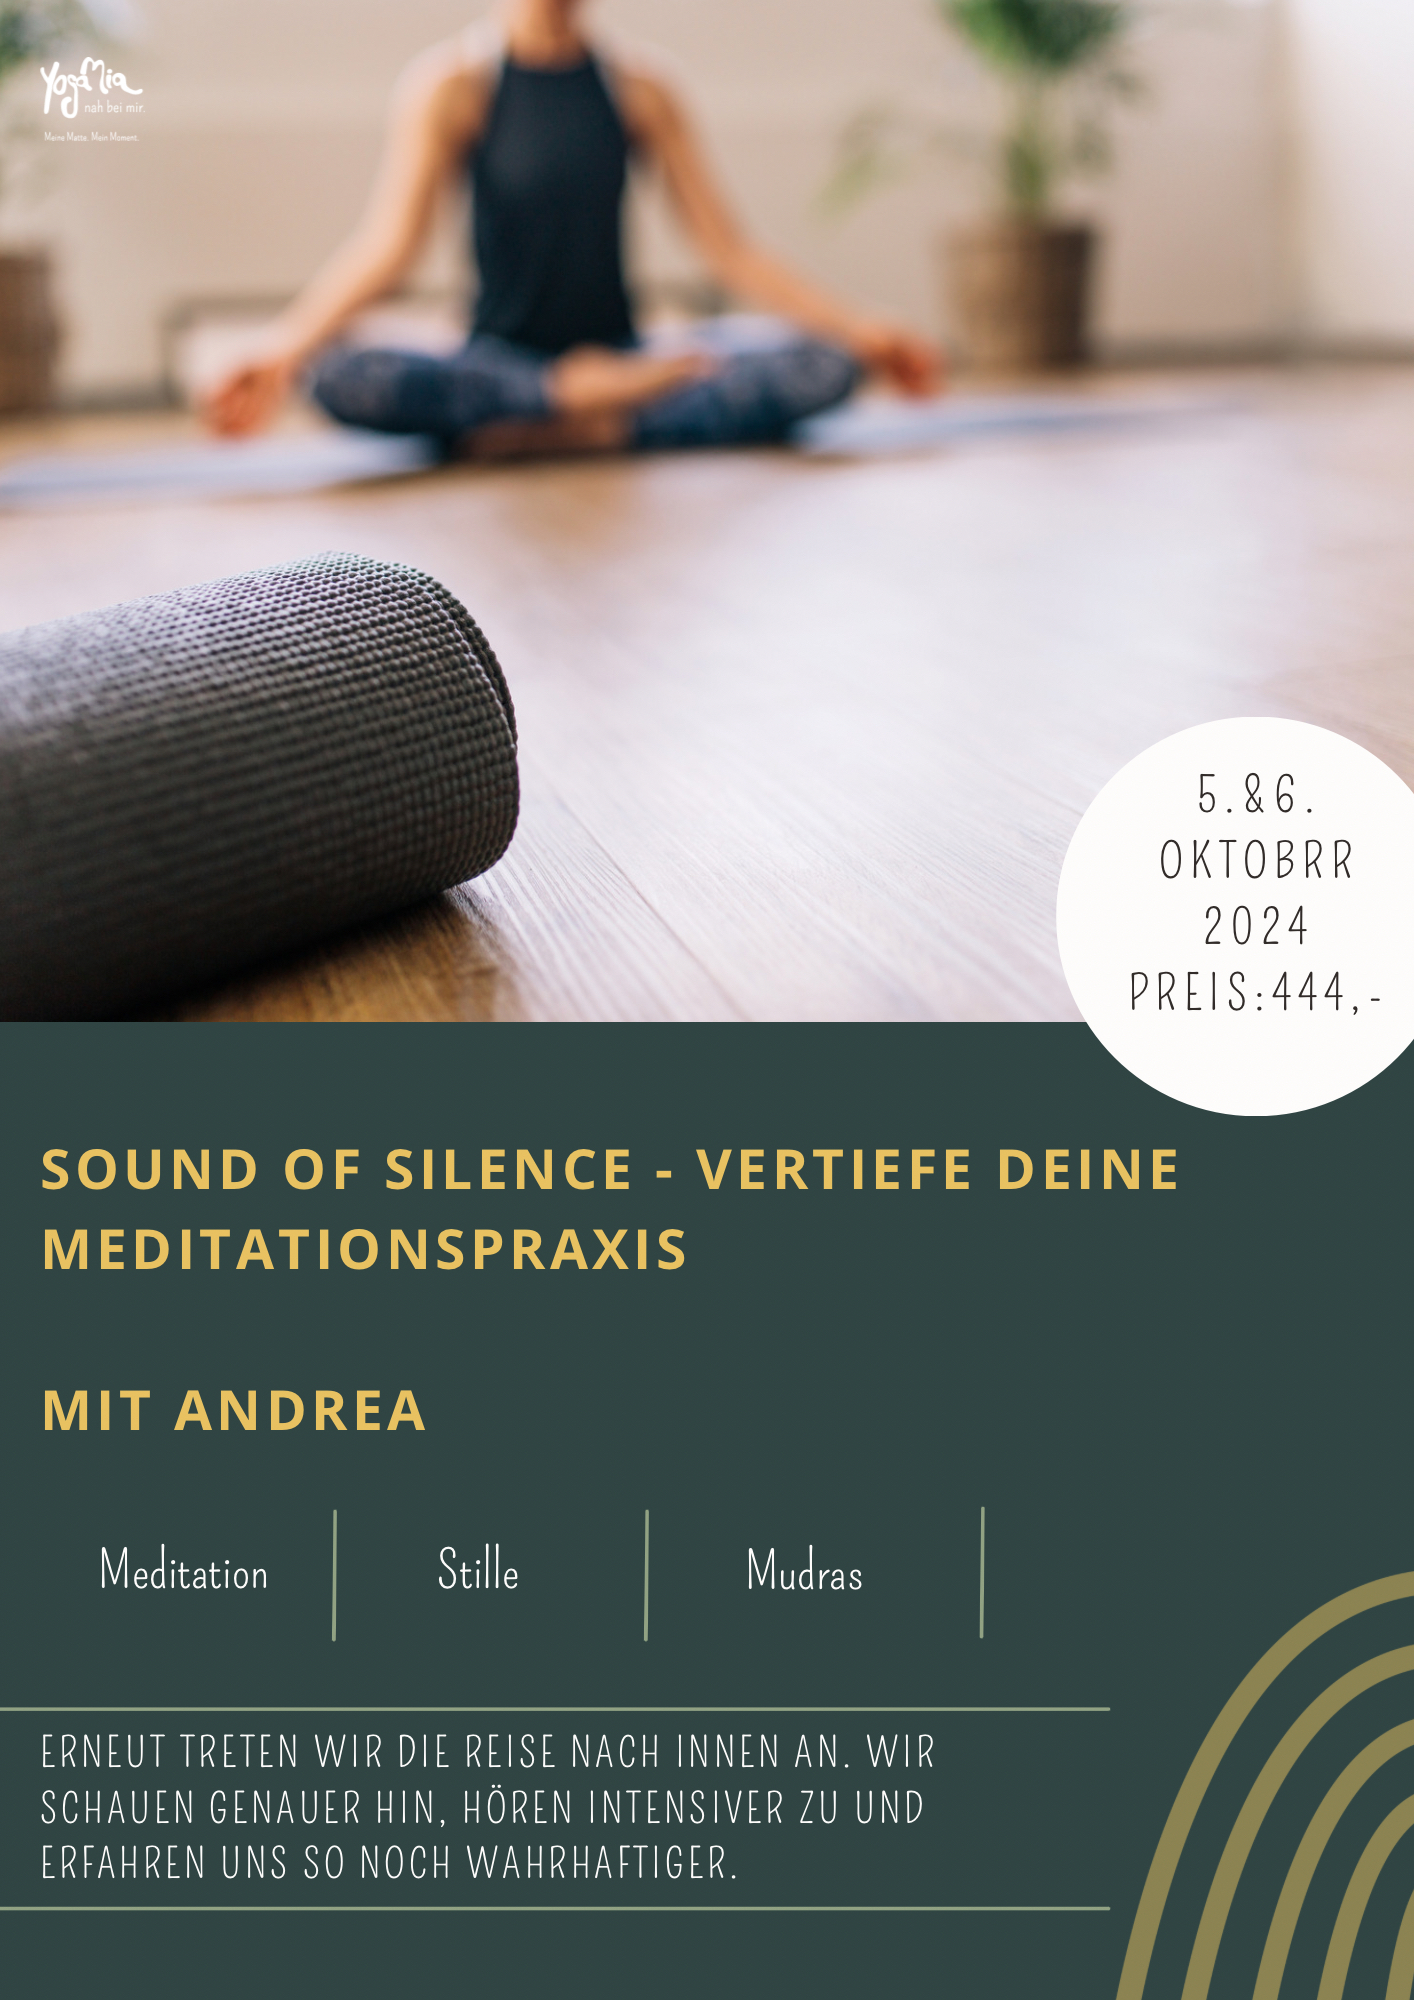 Sound of Silence - vertiefe deine Meditationspraxis mit Andrea